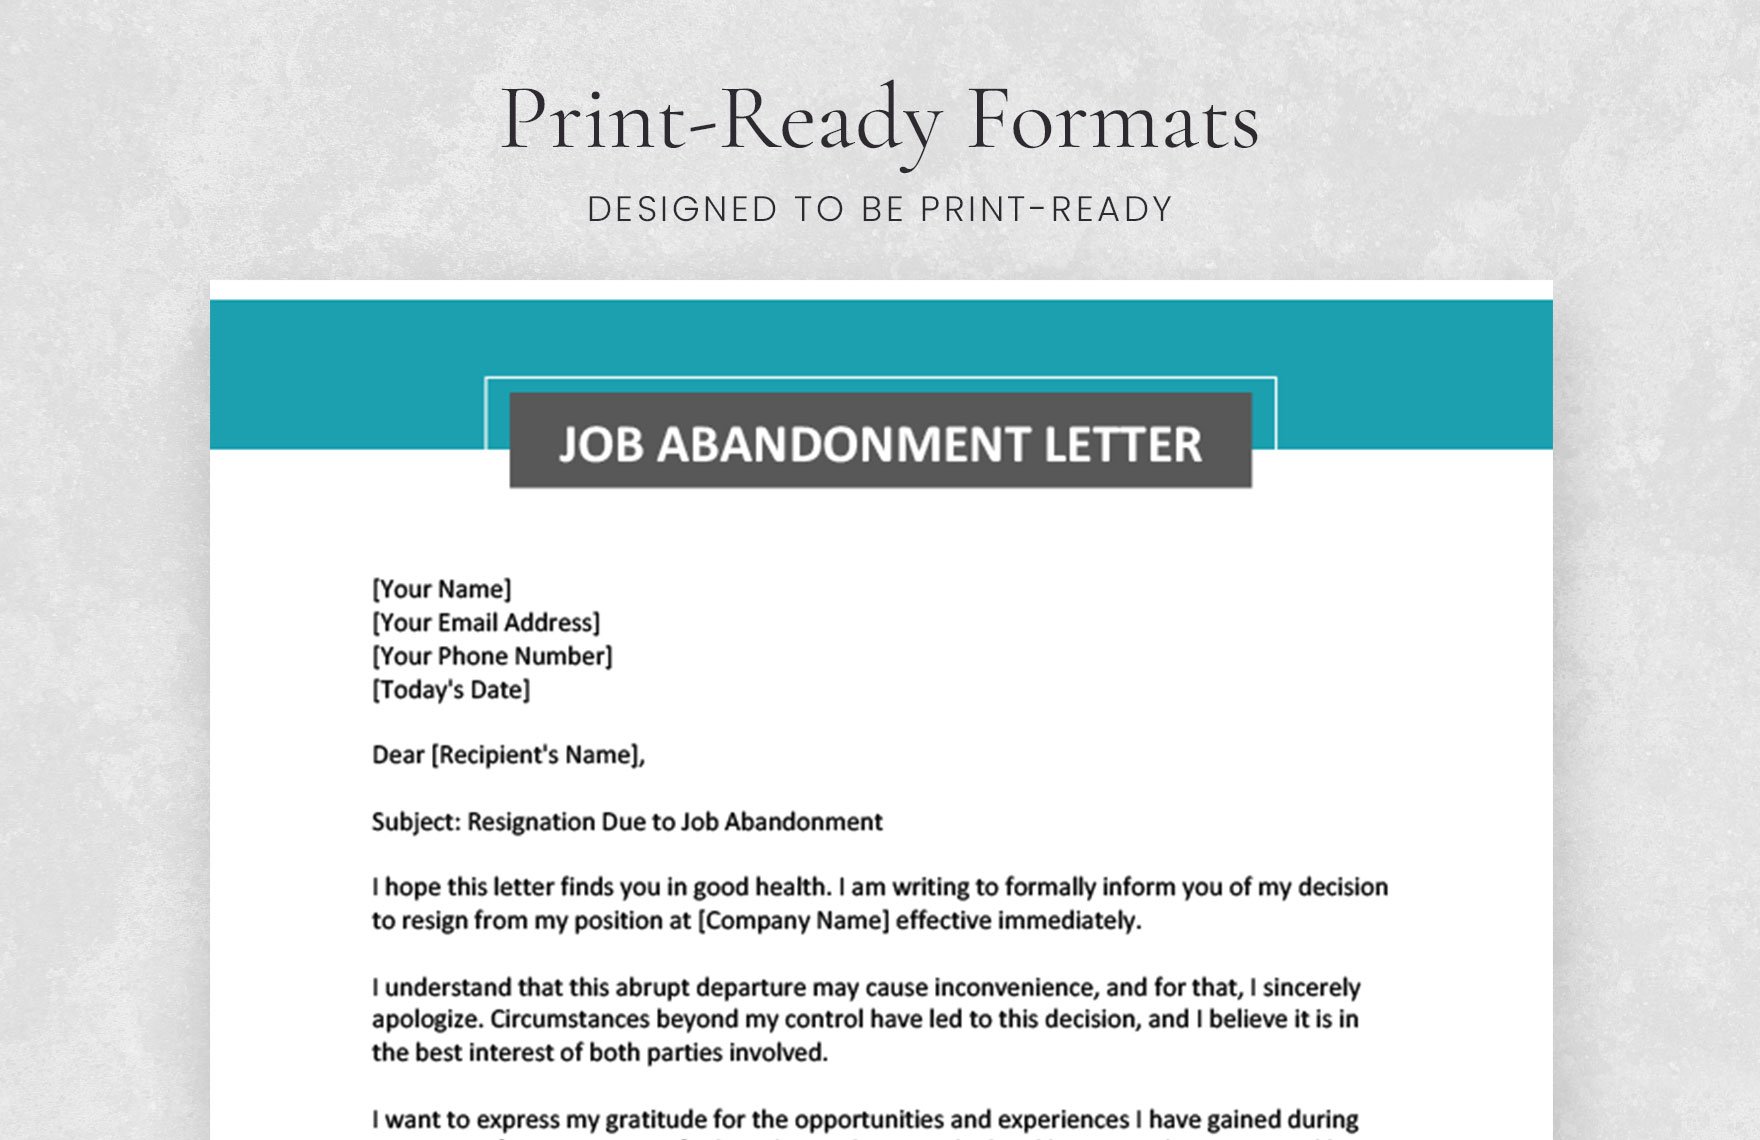 Job Abandonment Letter